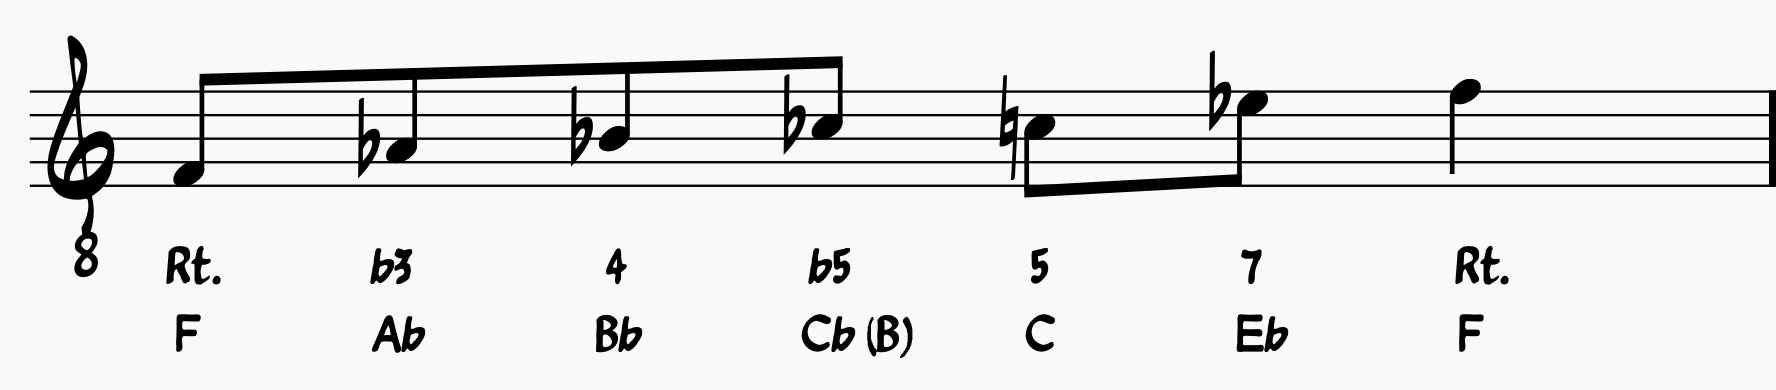 Blues Scale Guide: F minor blues scale